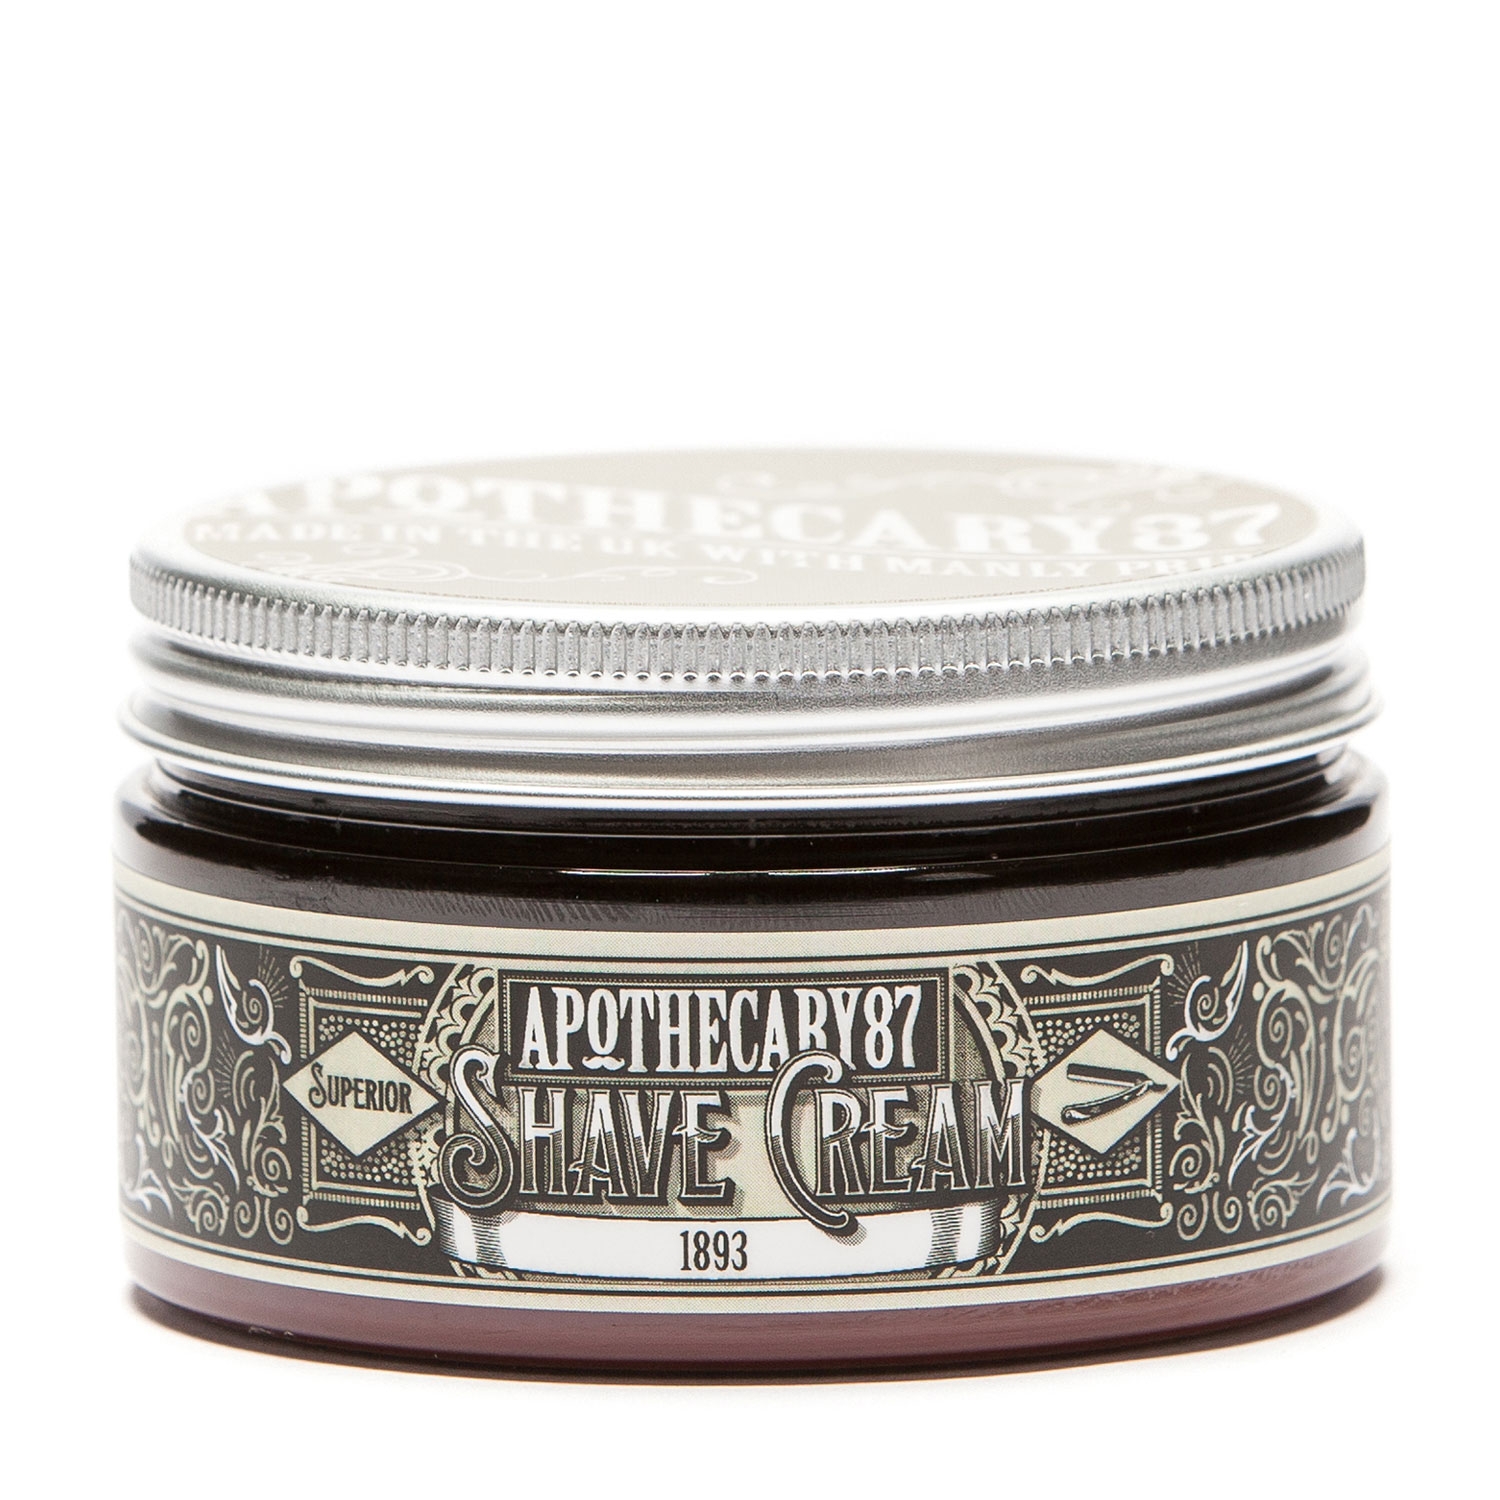 Image du produit de Apothecary87 Grooming - Shave Cream 1893 Fragrance